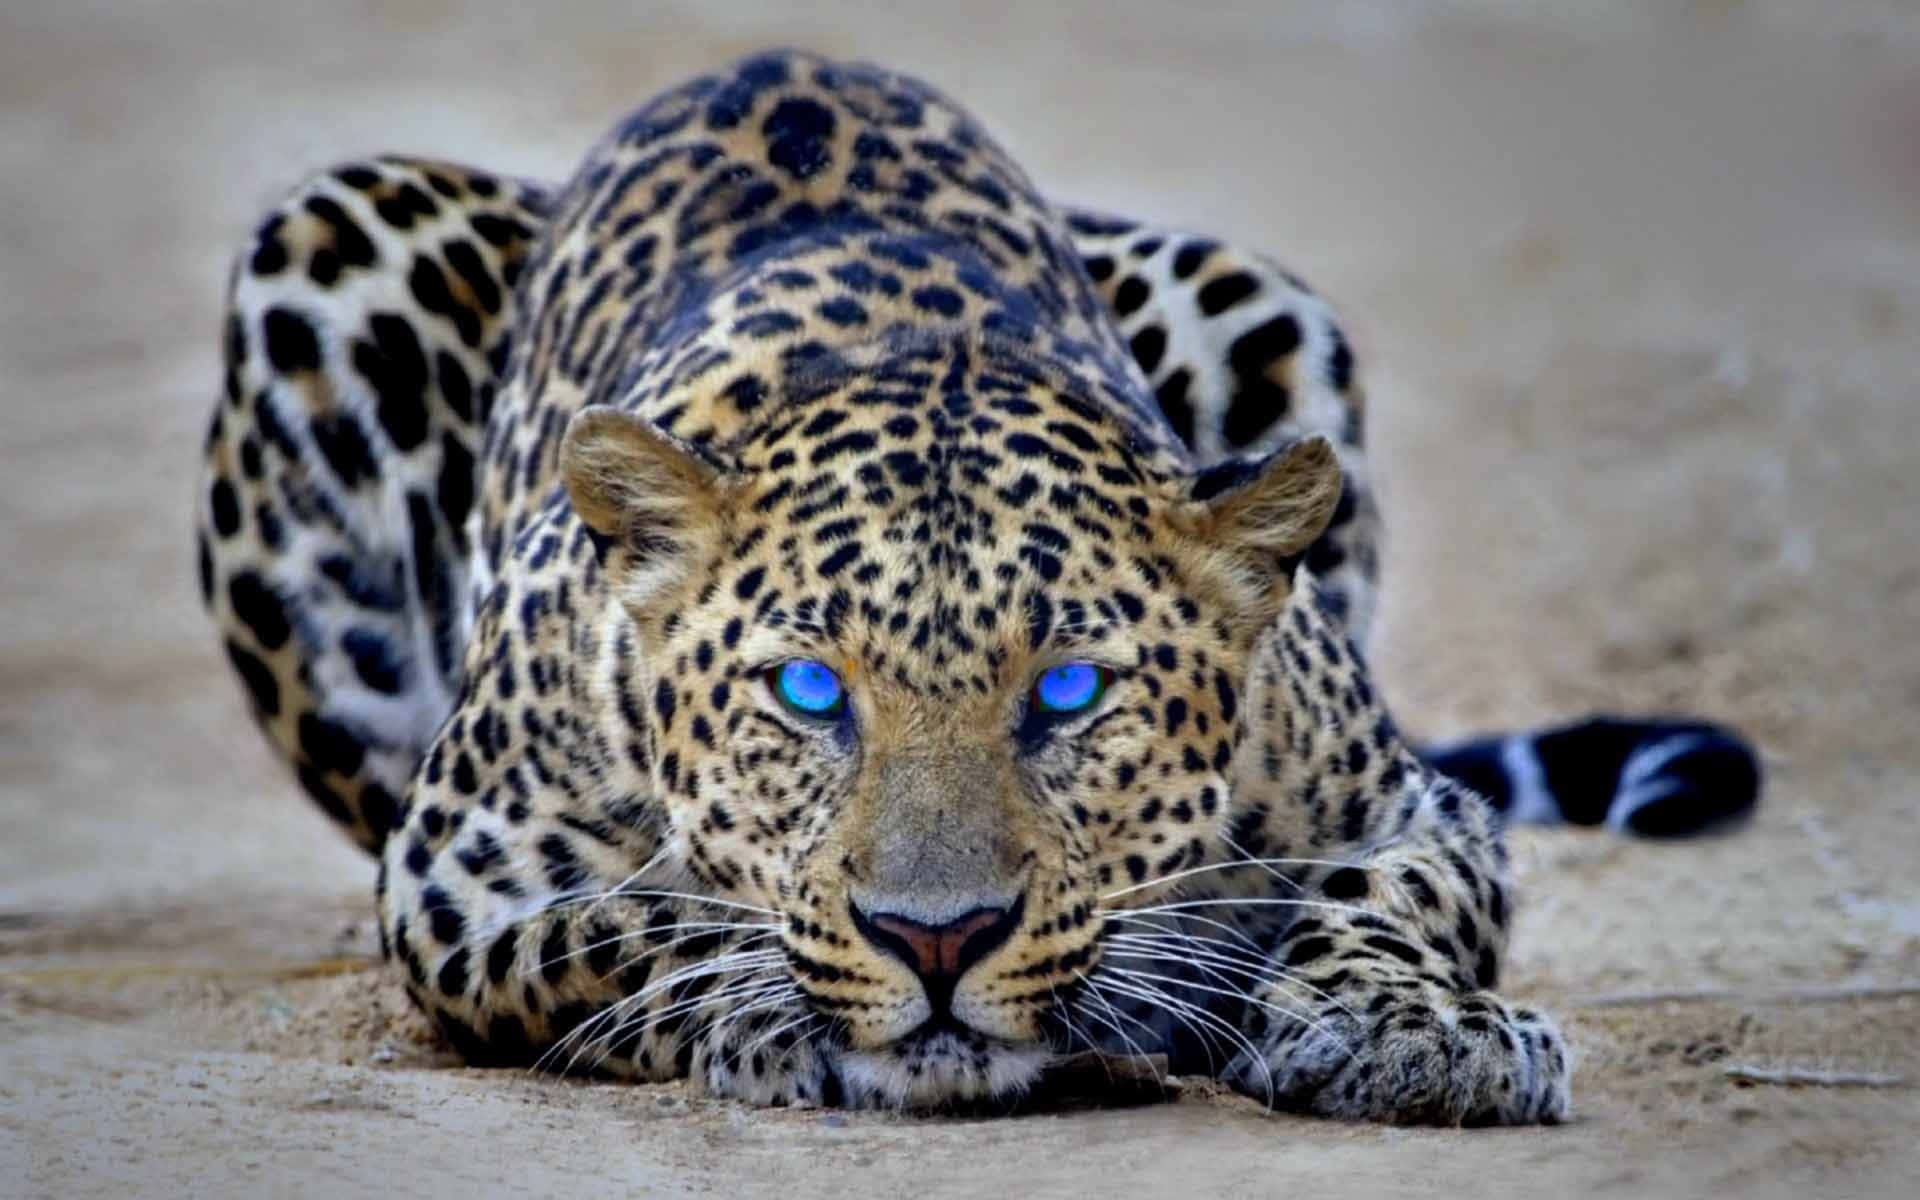 A cheetah in its natural habitat